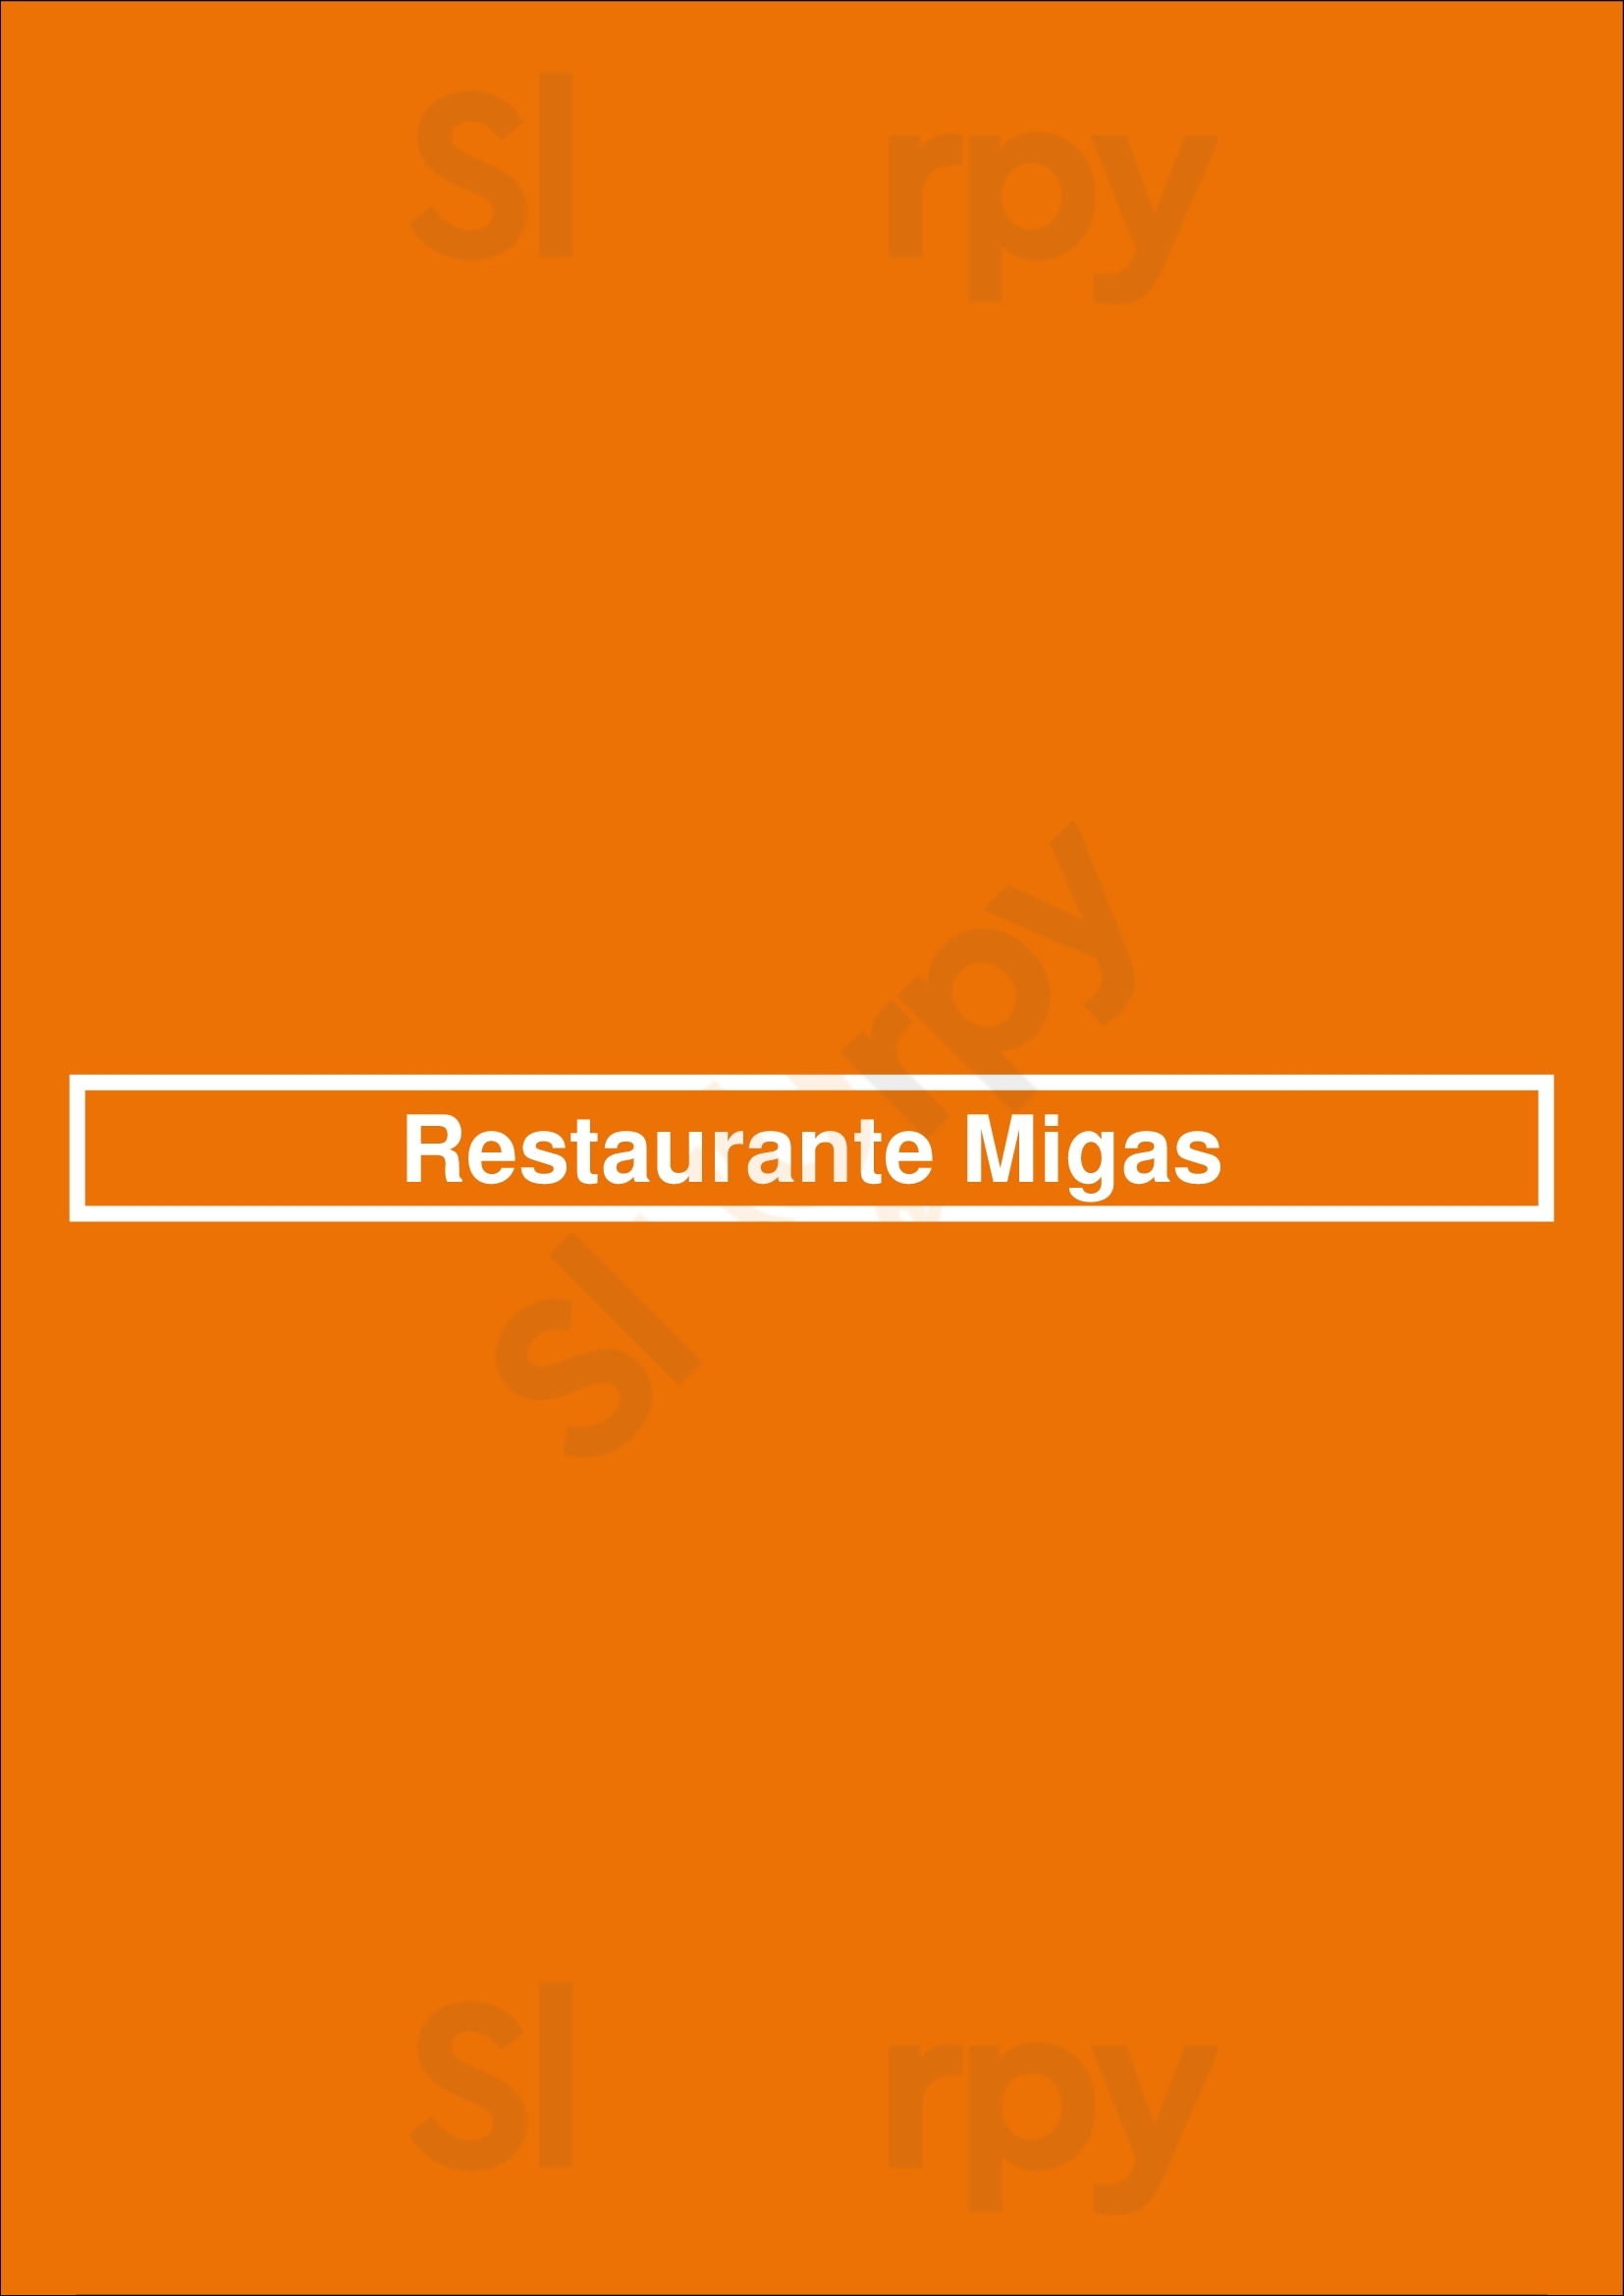 Migas Grill Guimarães Menu - 1